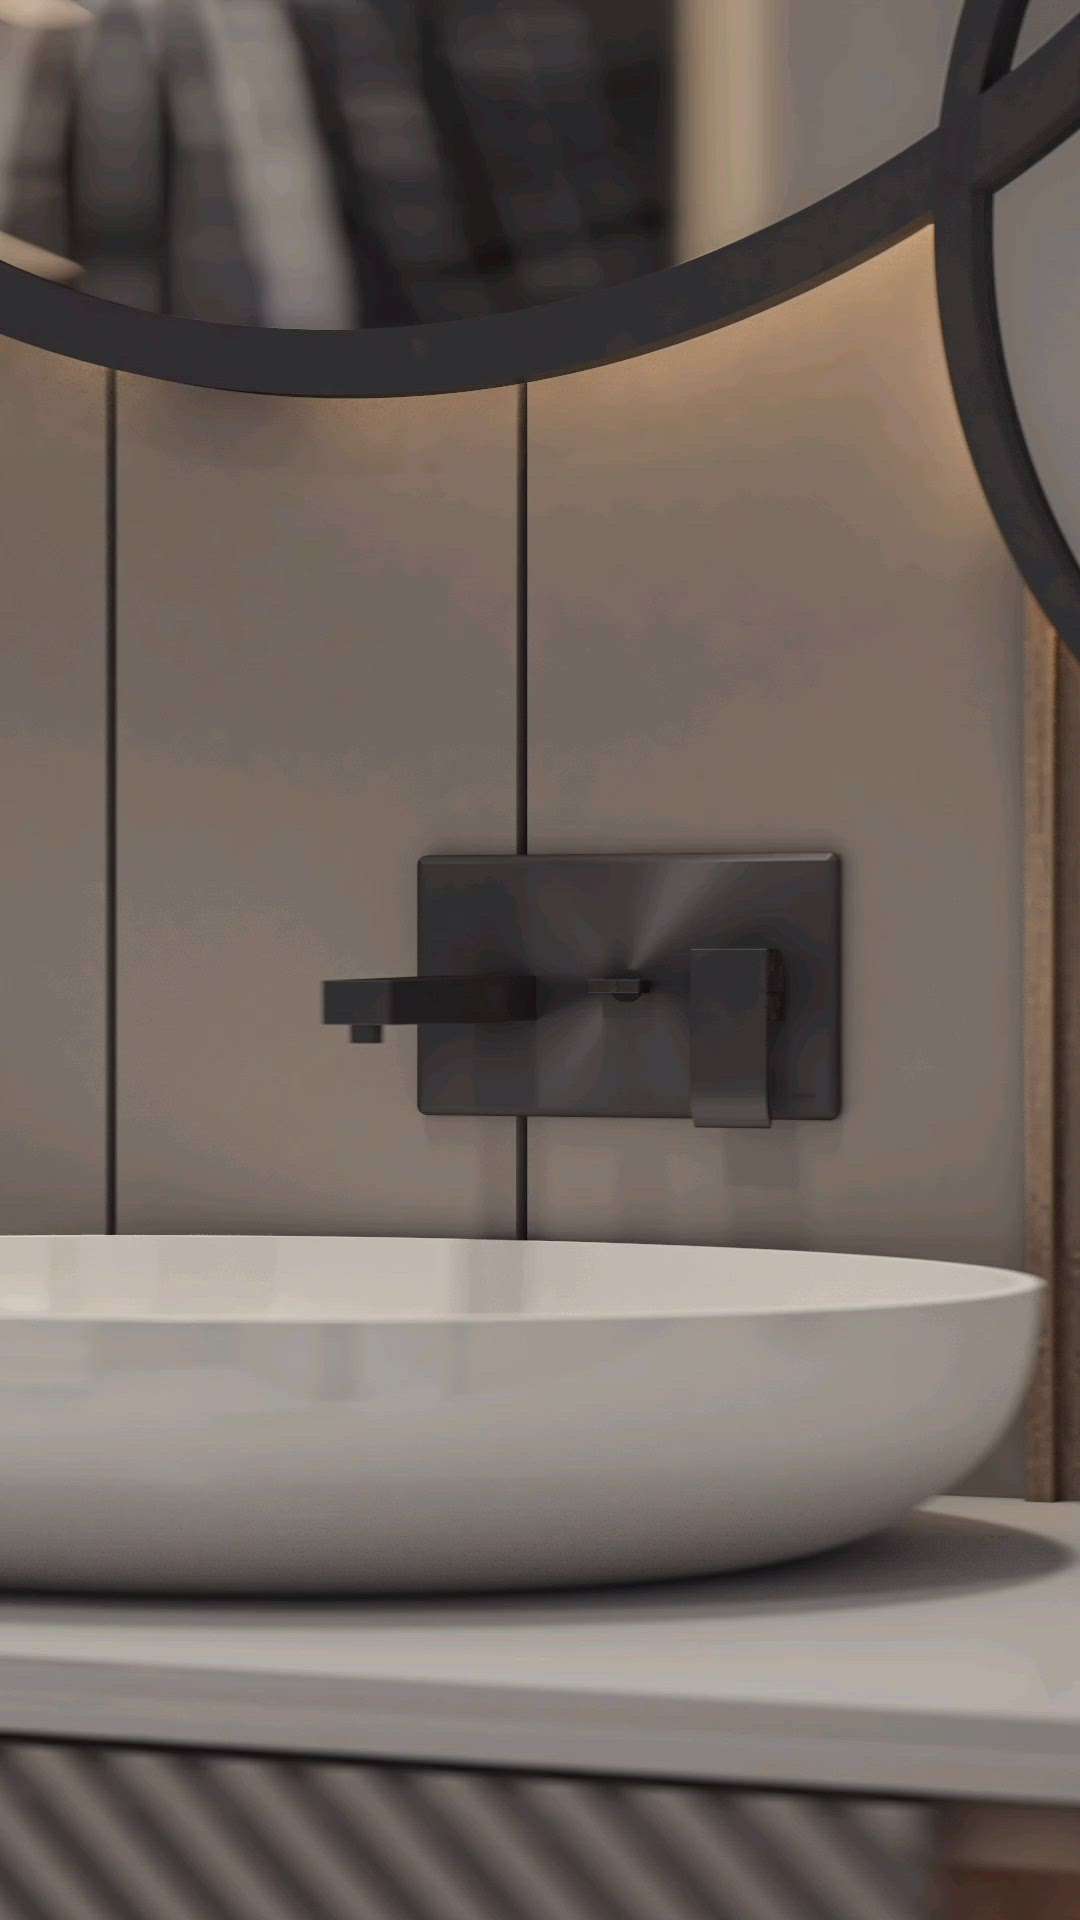 bathroom design idea!!
3d rendering !!
#BathroomDesigns #BathroomIdeas #bathroomwalldesign #vanitydesigns #bathroomvanity 
#3drendering #renderingdesign